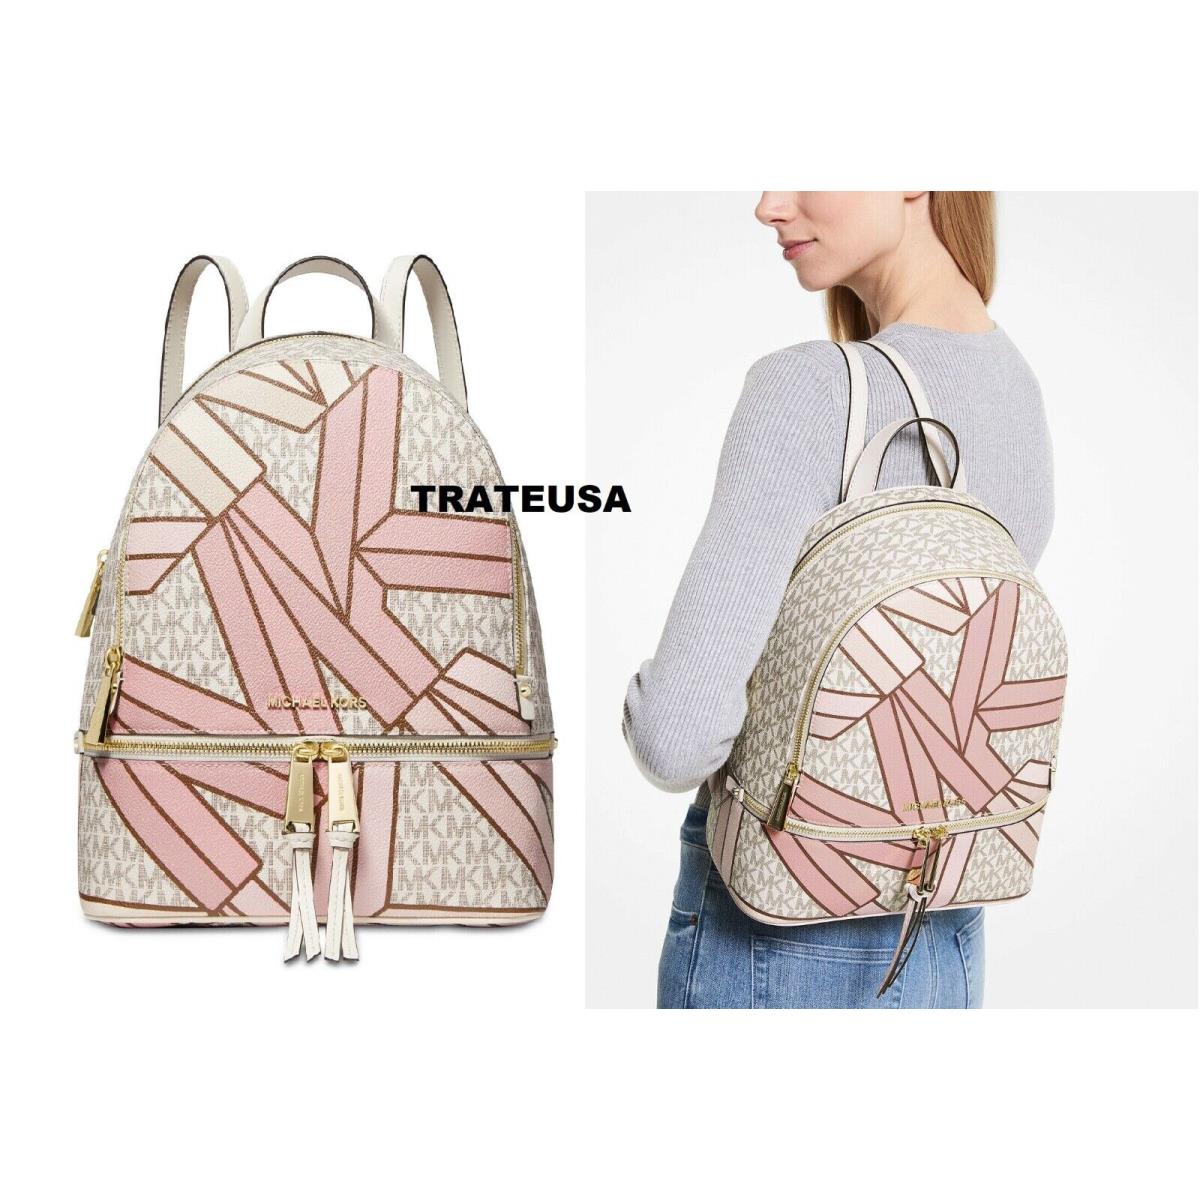  Michael Kors Rhea Zip Medium Backpack Vanilla Multi One Size :  Clothing, Shoes & Jewelry